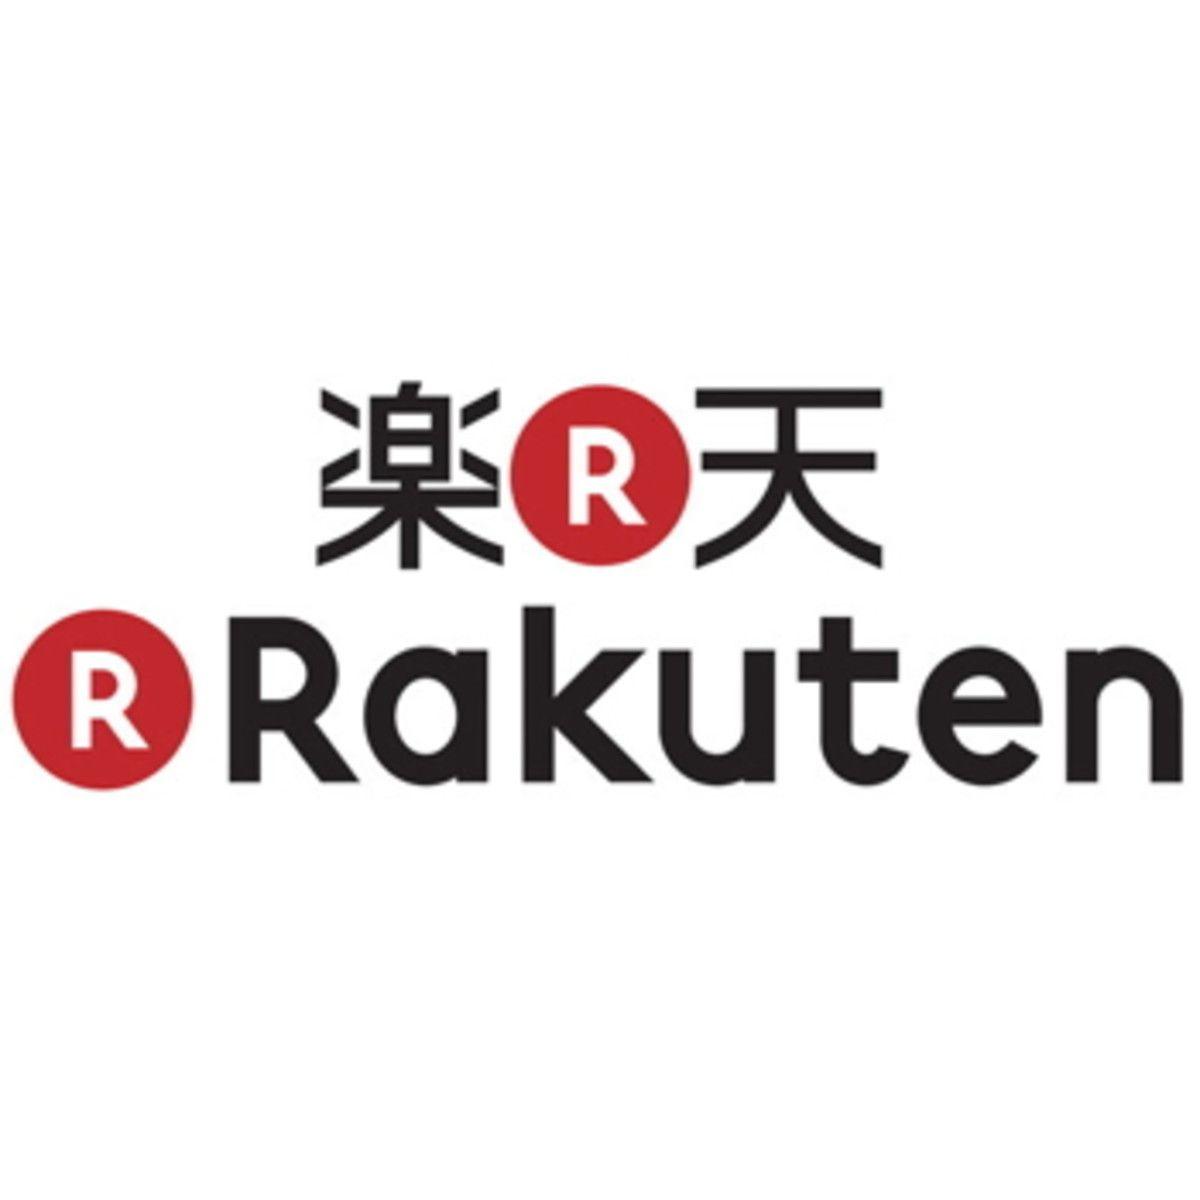 Rakuten Viber Logo - Play.com owner Rakuten buys Skype rival Viber - PC Retail